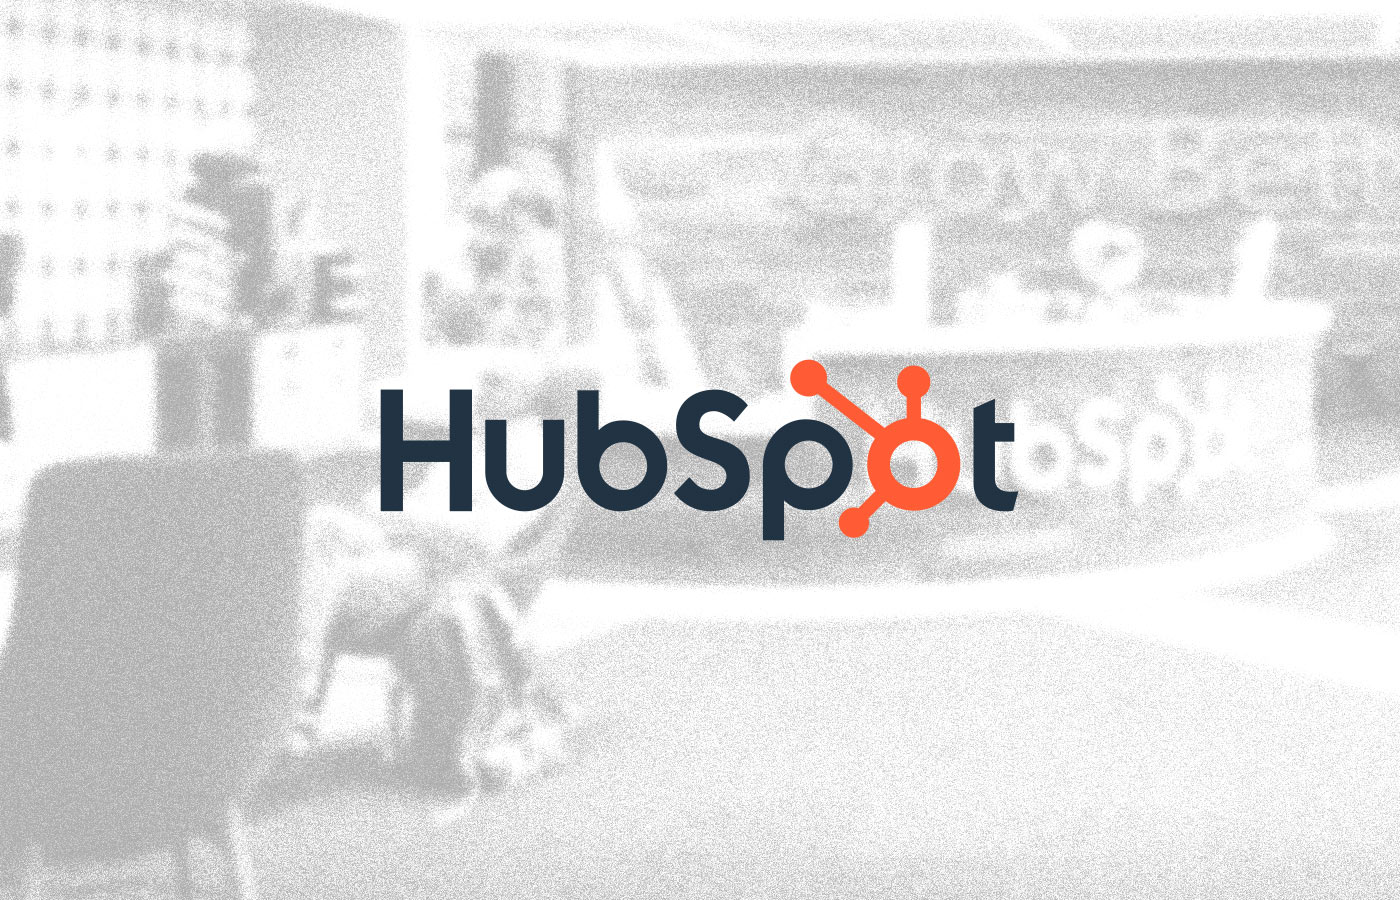 hubSpot logo on grainy background